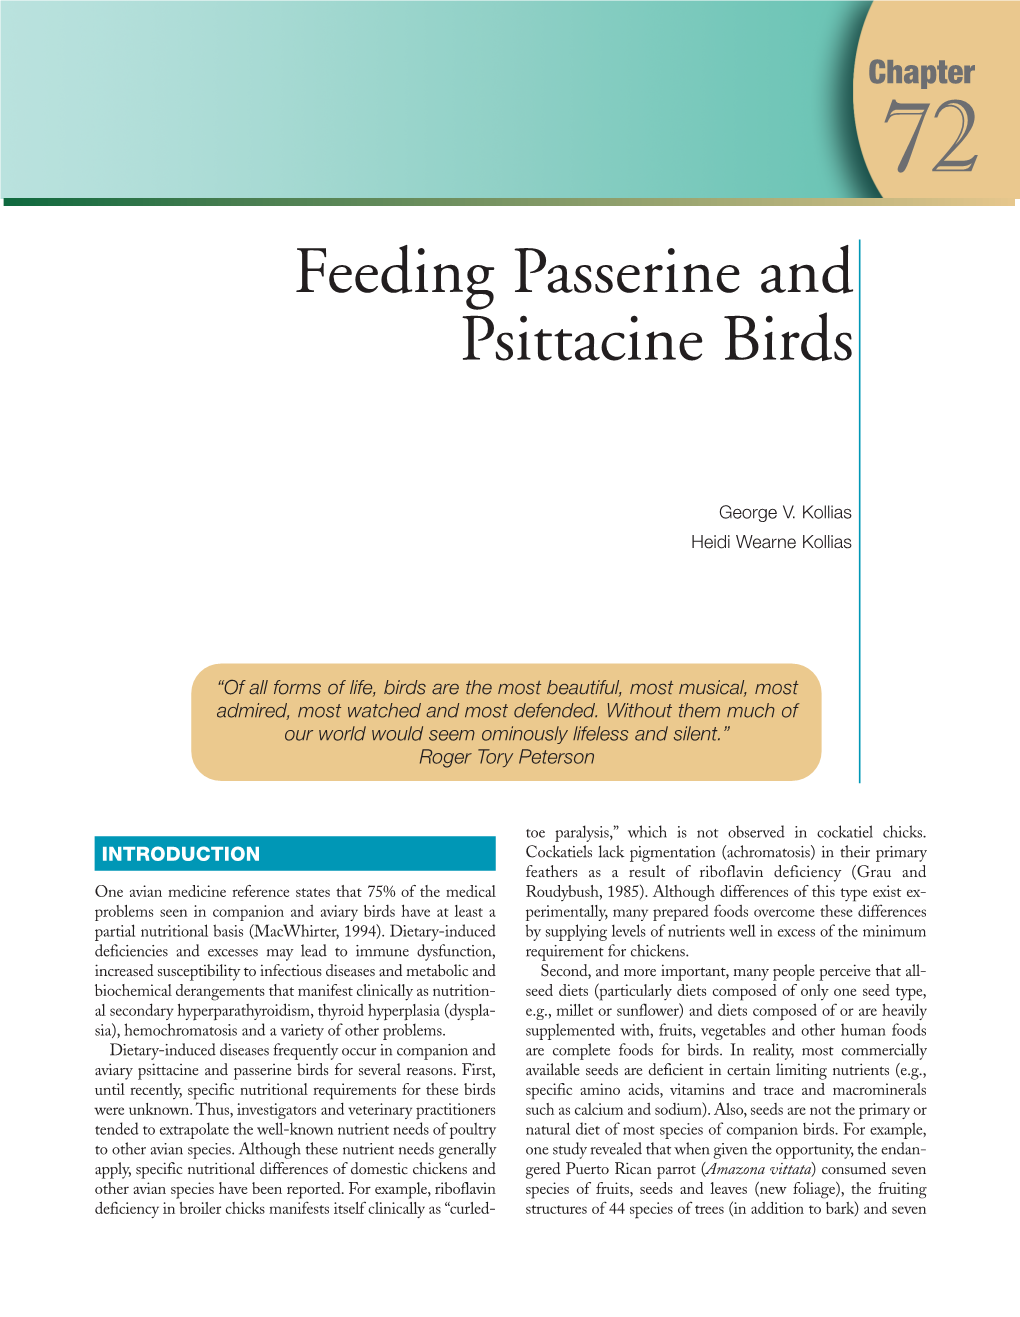 Feeding Passerine and Psittacine Birds